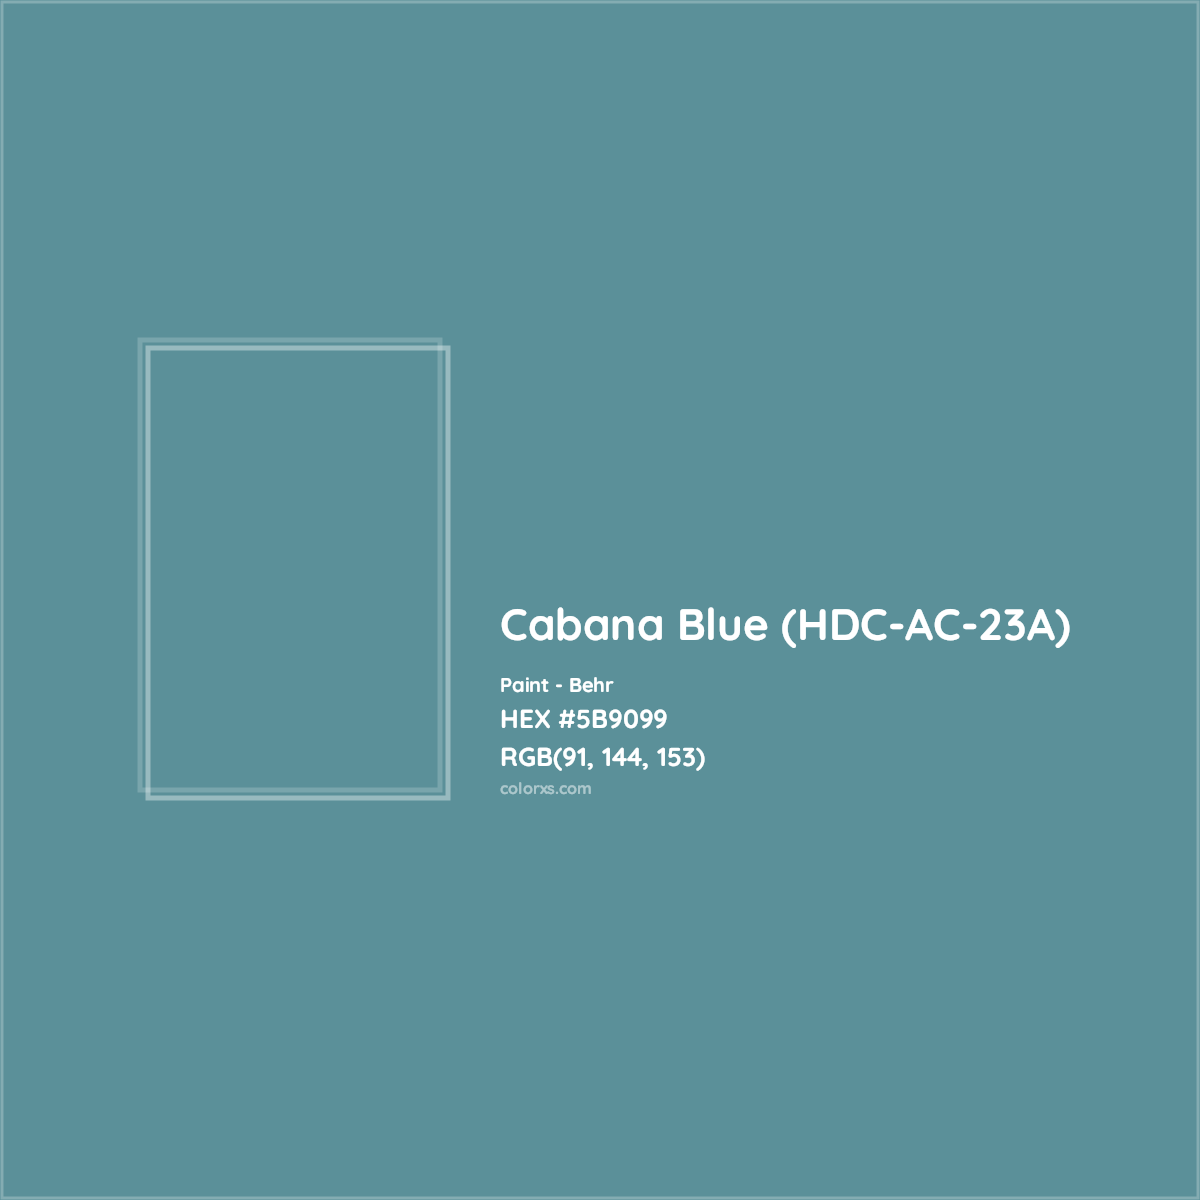 HEX #5B9099 Cabana Blue (HDC-AC-23A) Paint Behr - Color Code